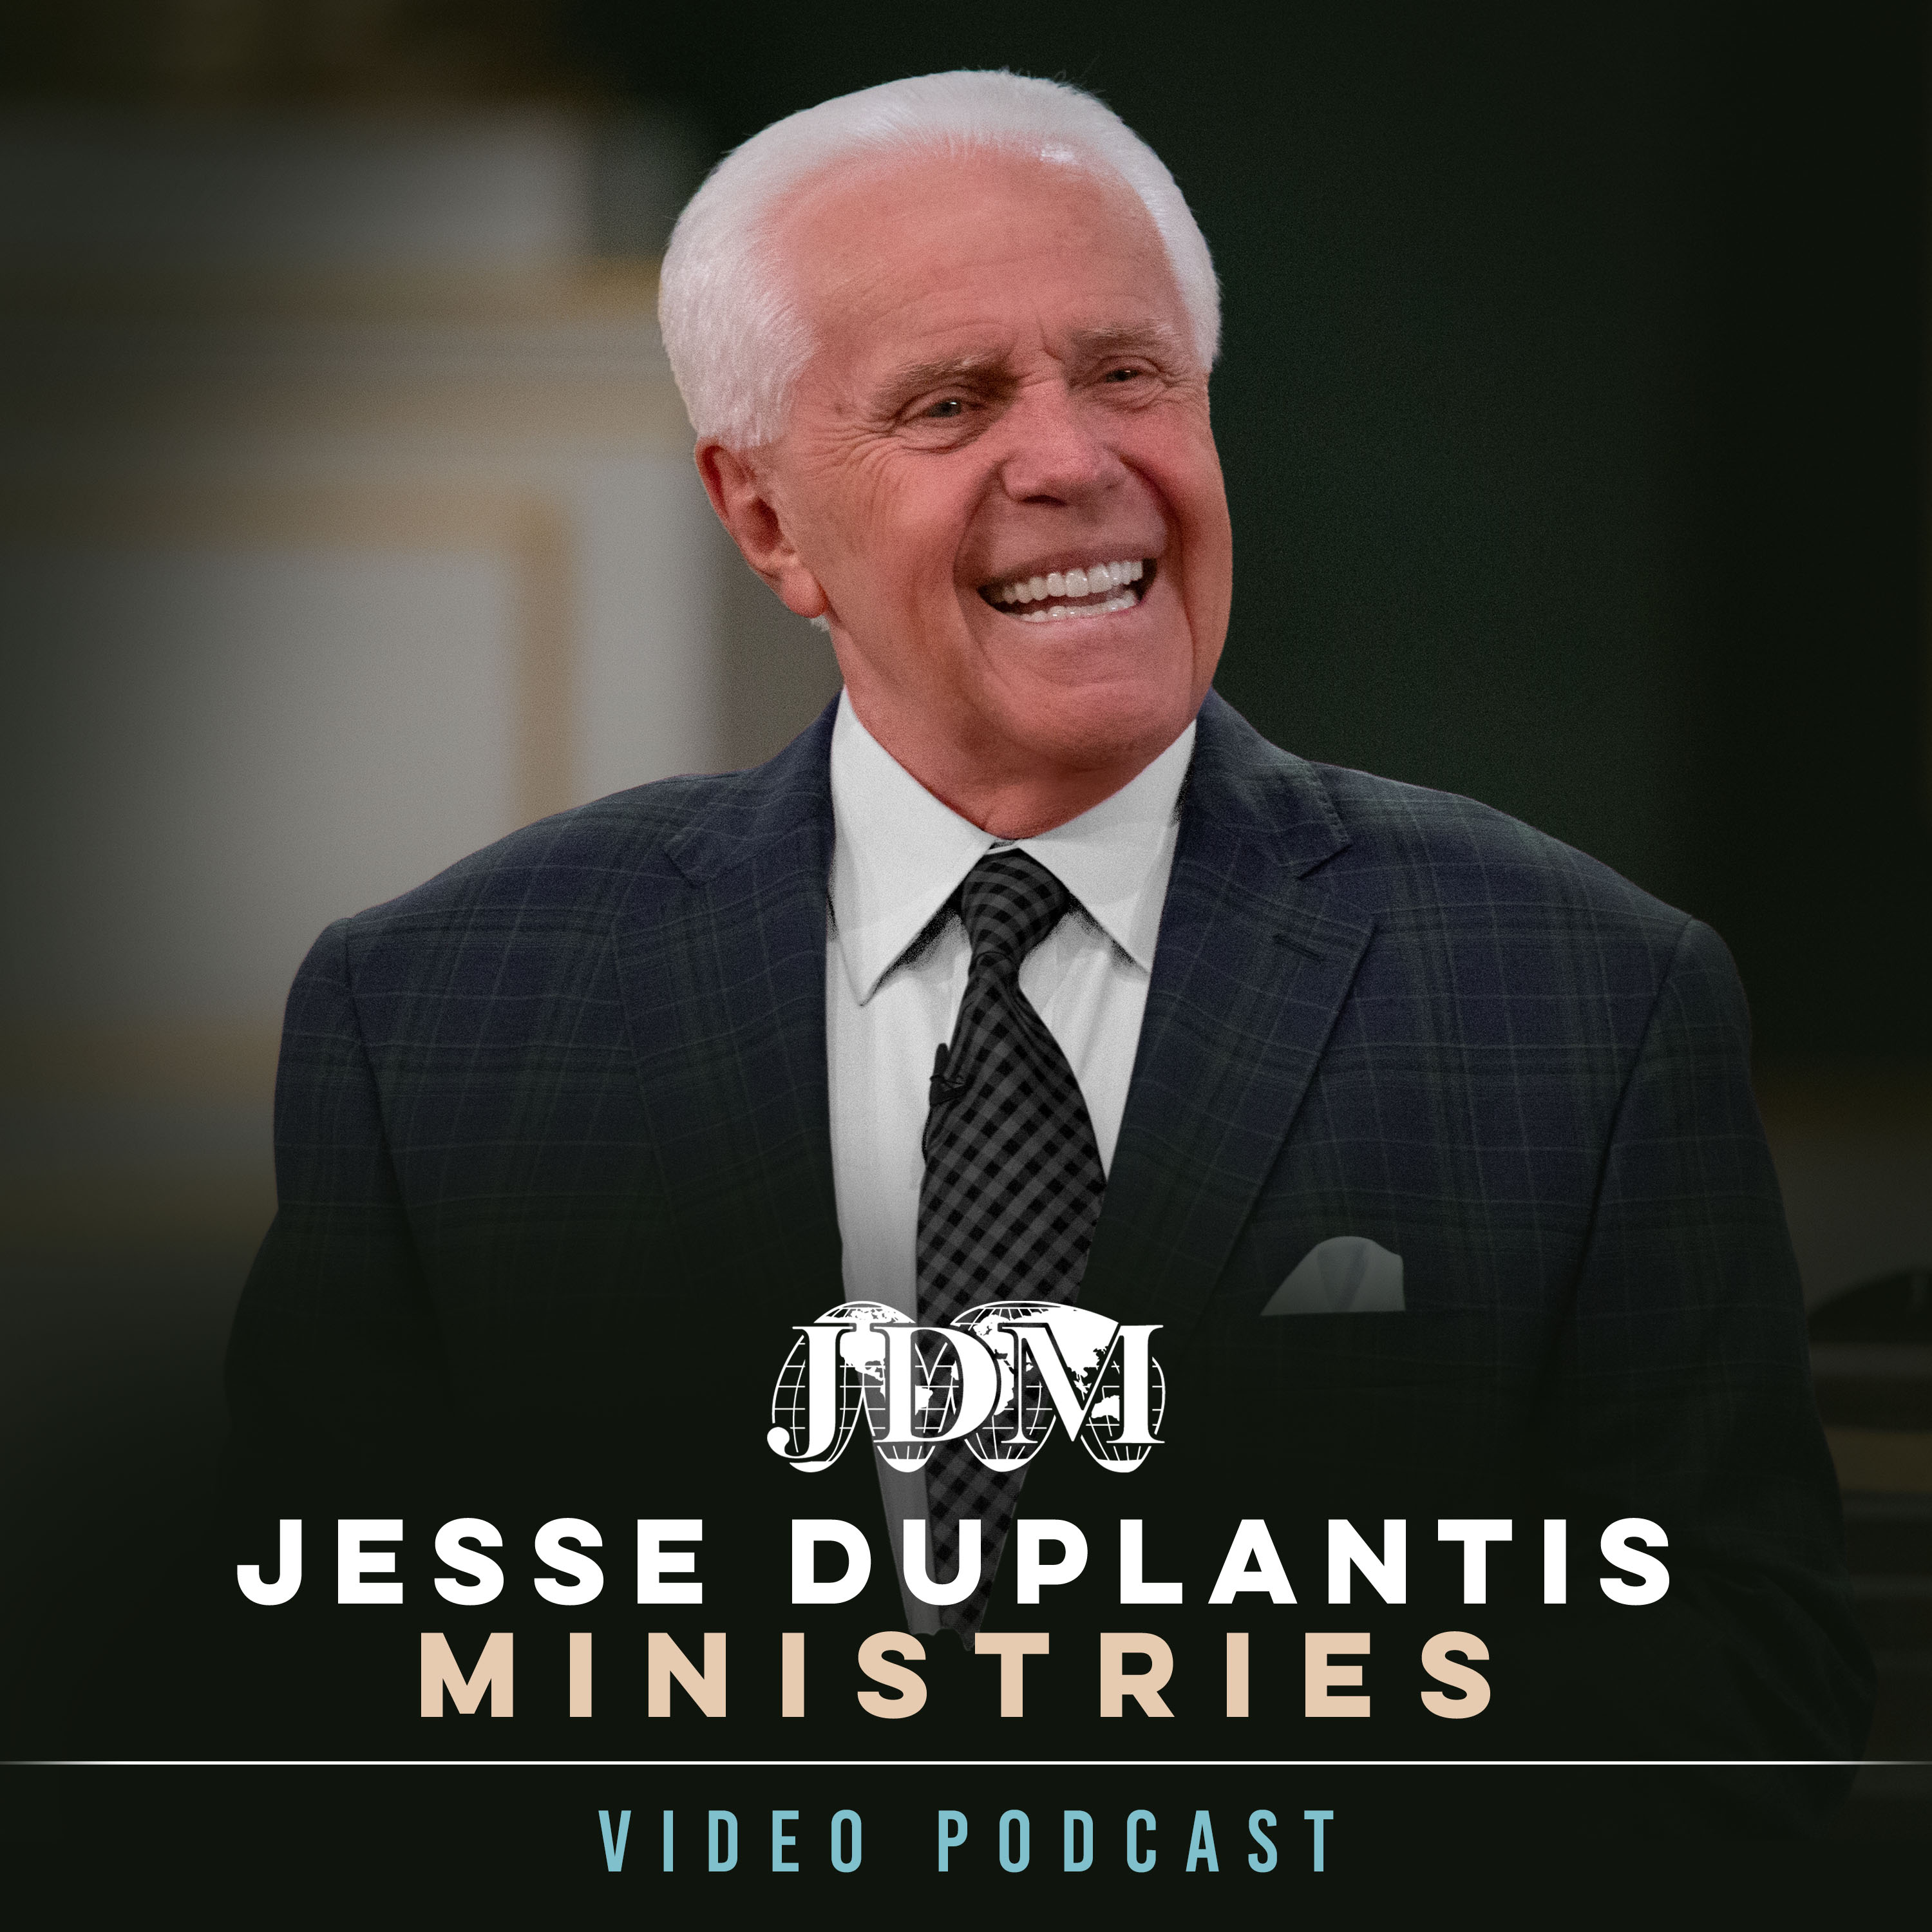 Jesse Duplantis Ministries Video Podcast